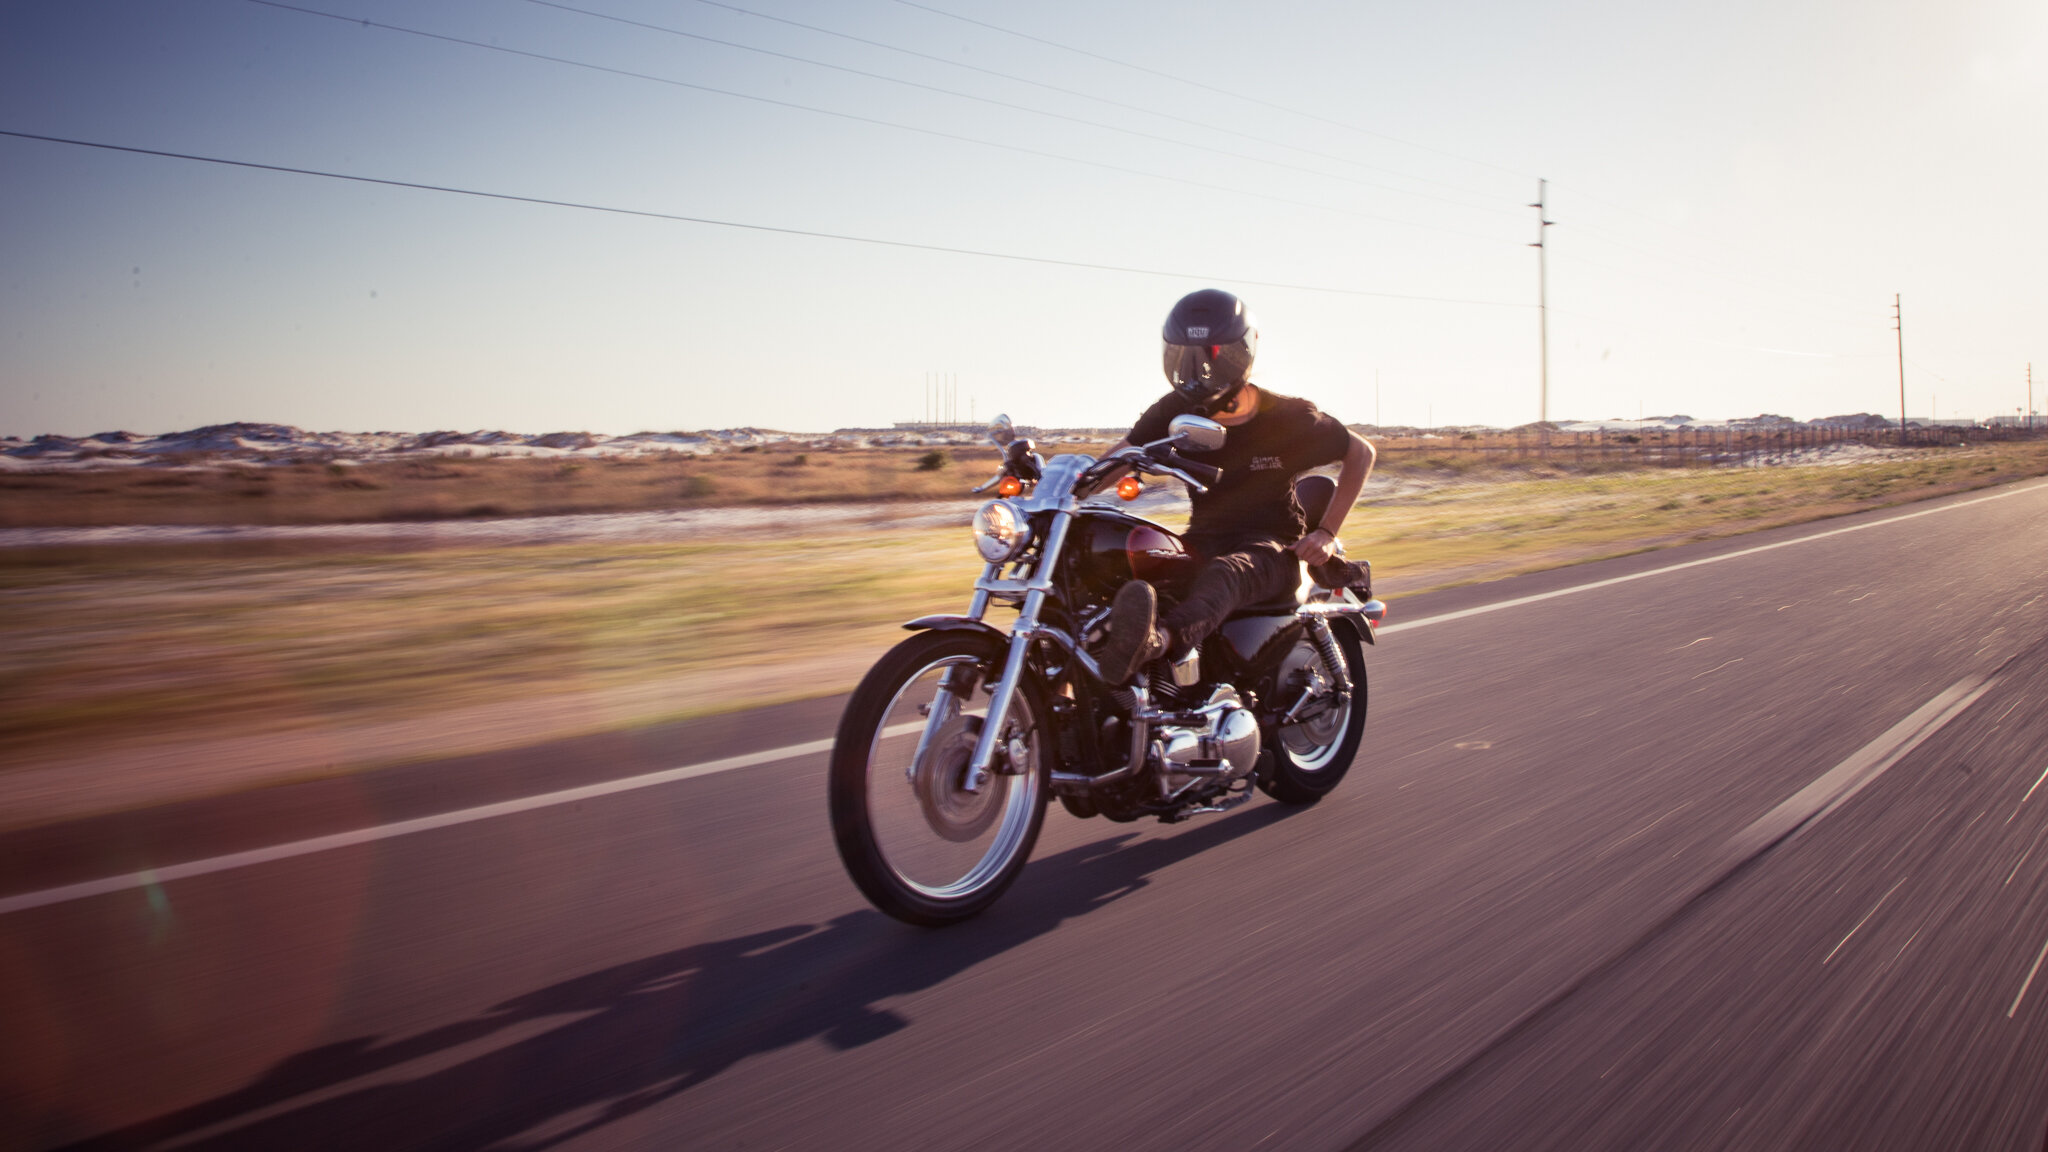 mason_bruner_motorcycle-1091.jpg